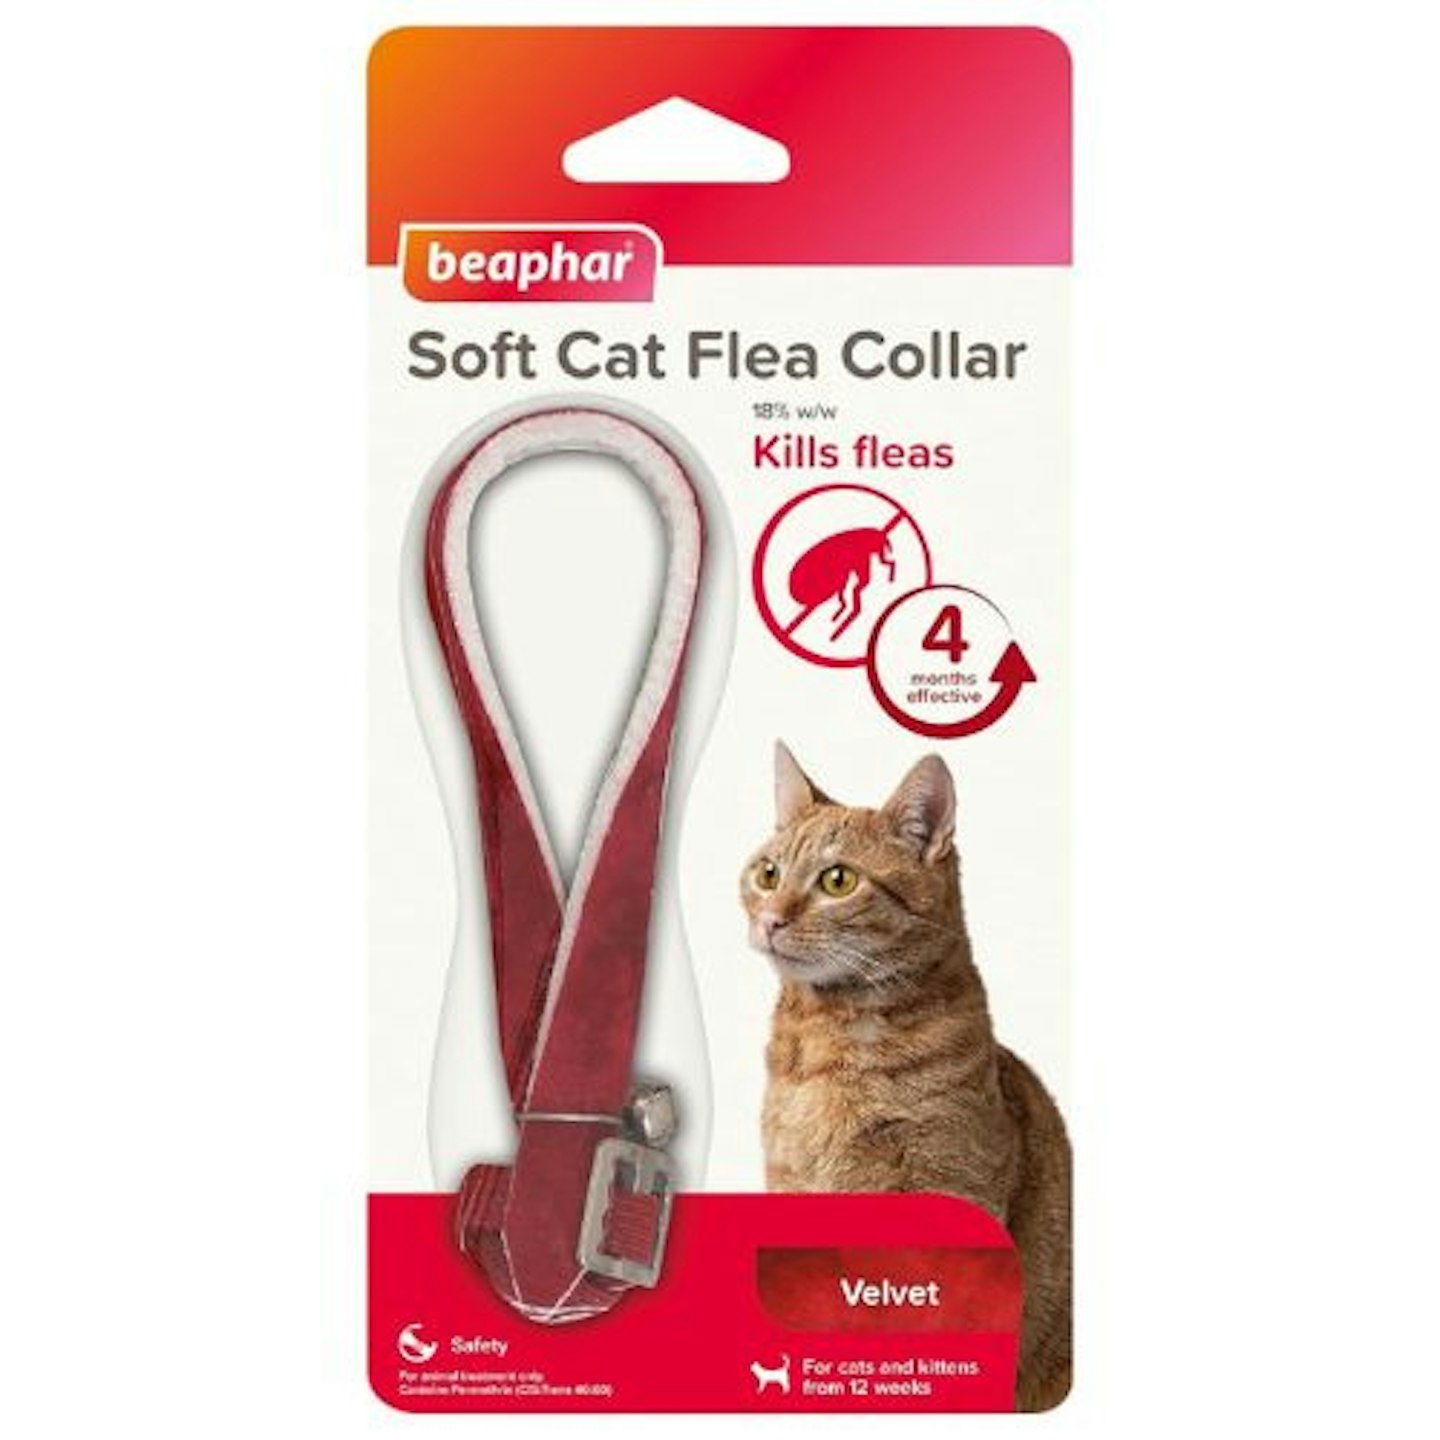 Beaphar Soft Flea Collar for Cats